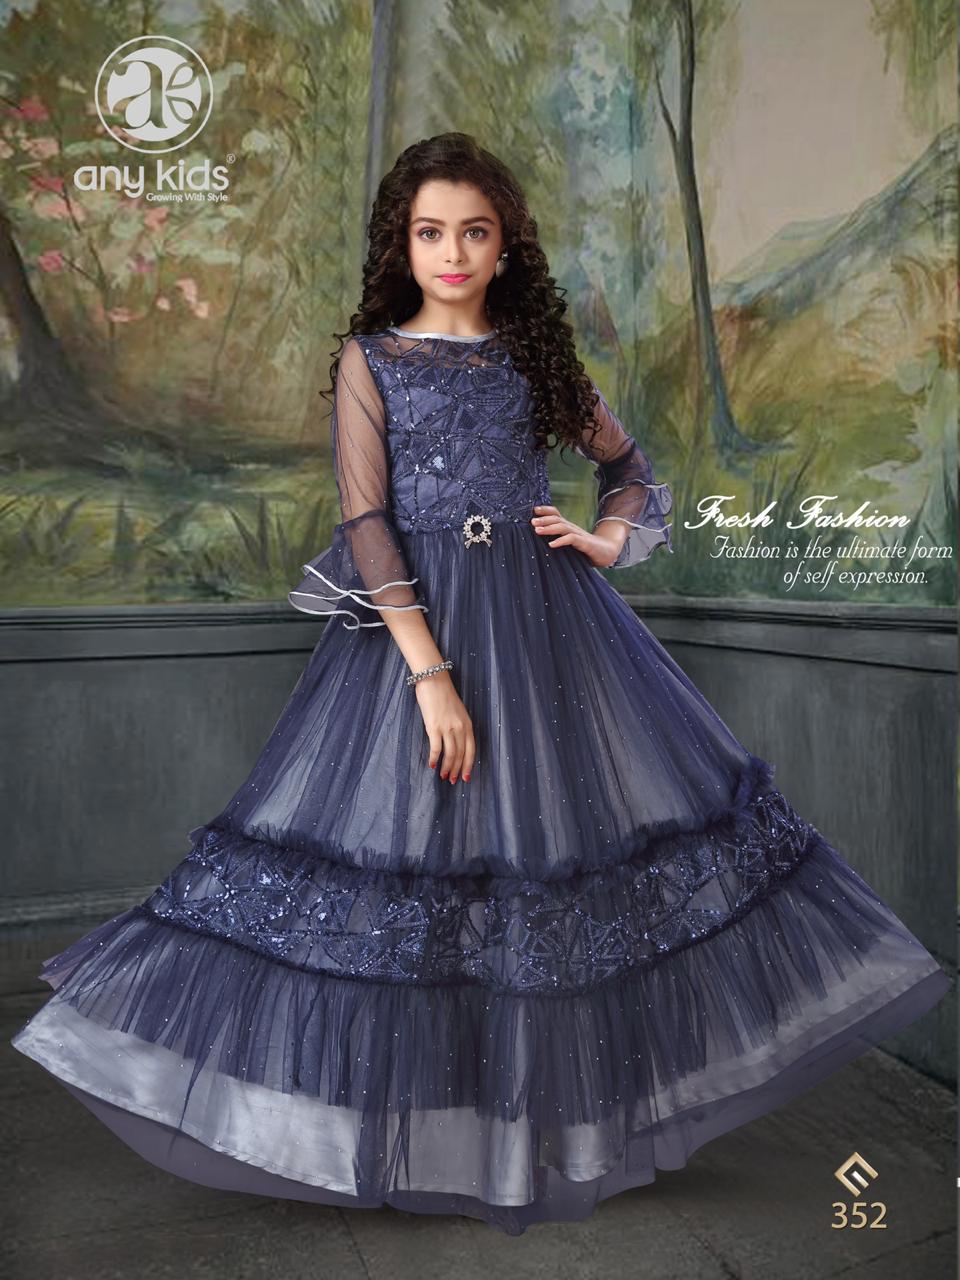 Any Kids Presents D.no.352 Exclusive Designer Kidswear Butterfly Net Work Gown Catalog Wholesaler In Surat